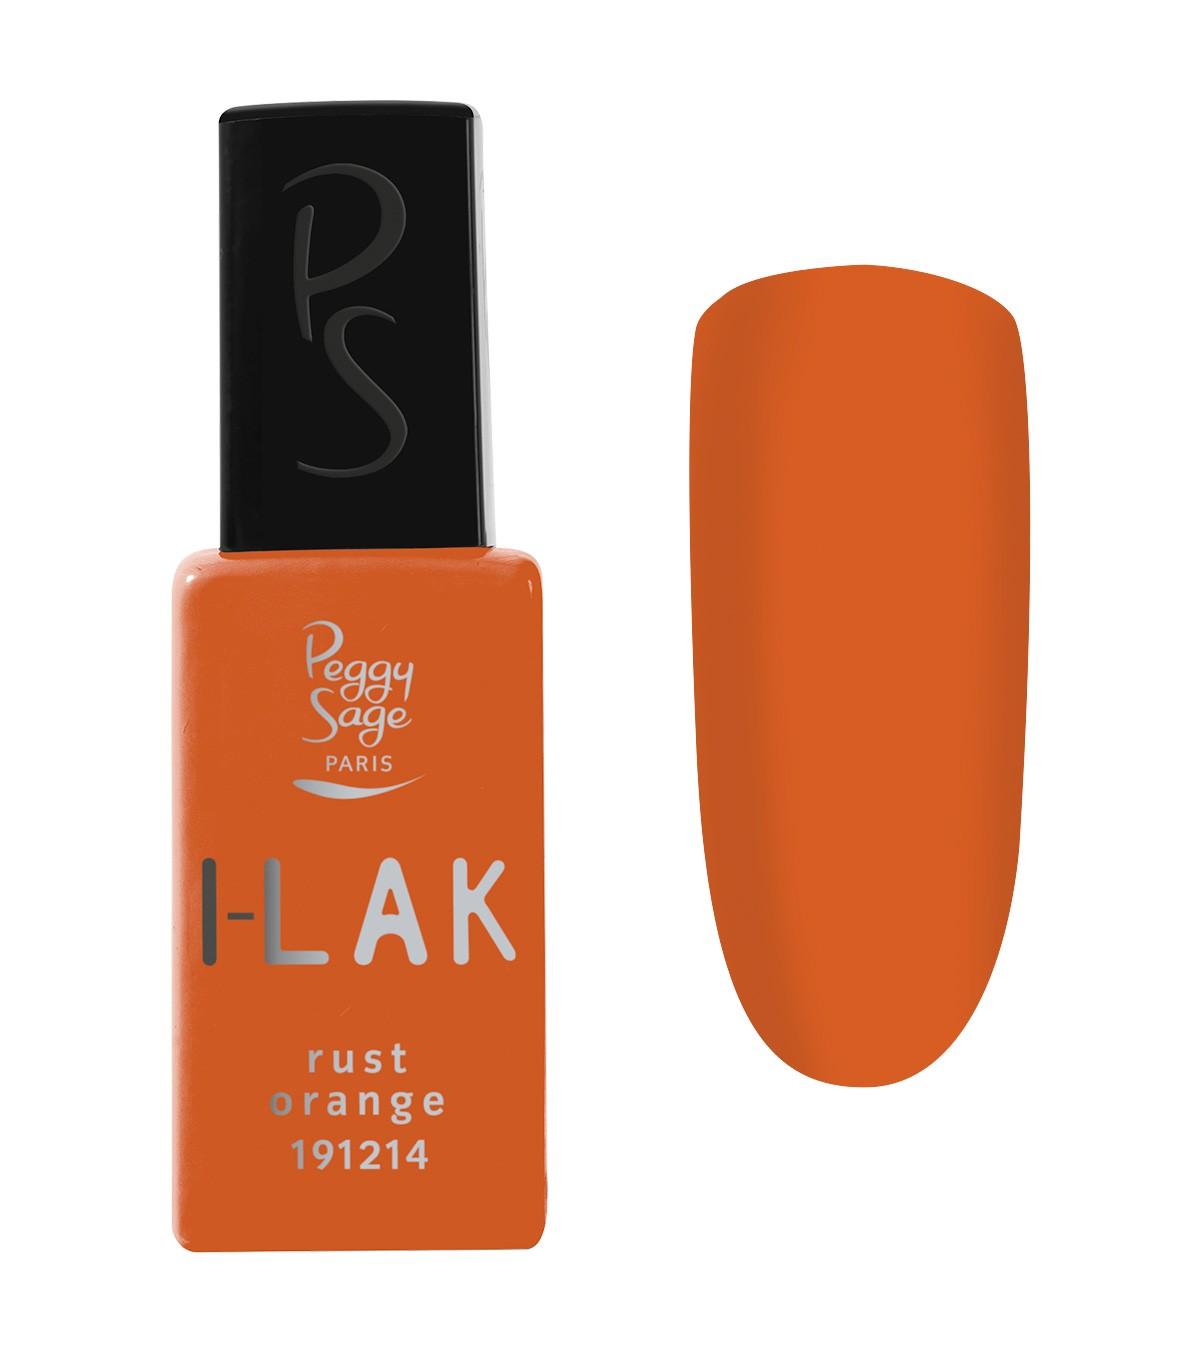 I-LAK Rust orange